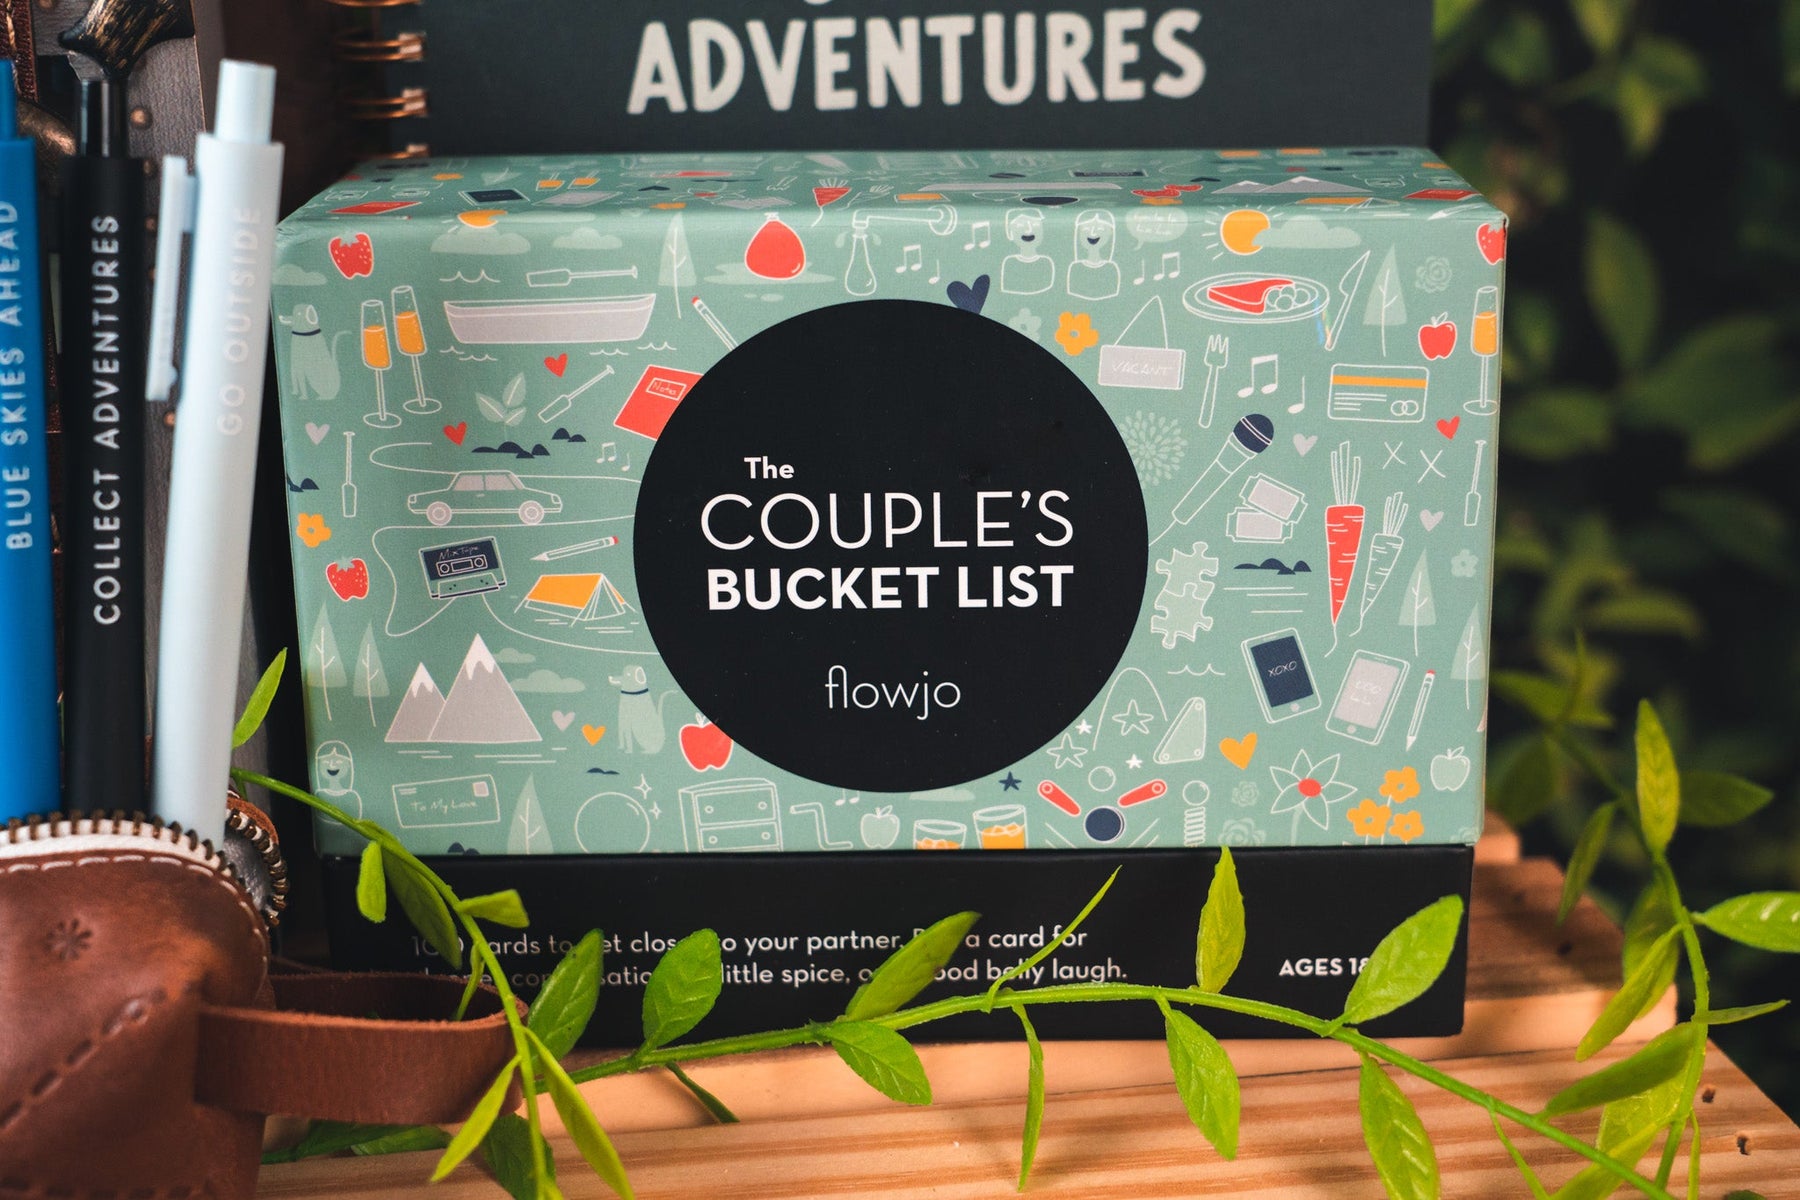 Bucket List Date Night Adventure Awaits Activity Box - Trailblazing Love